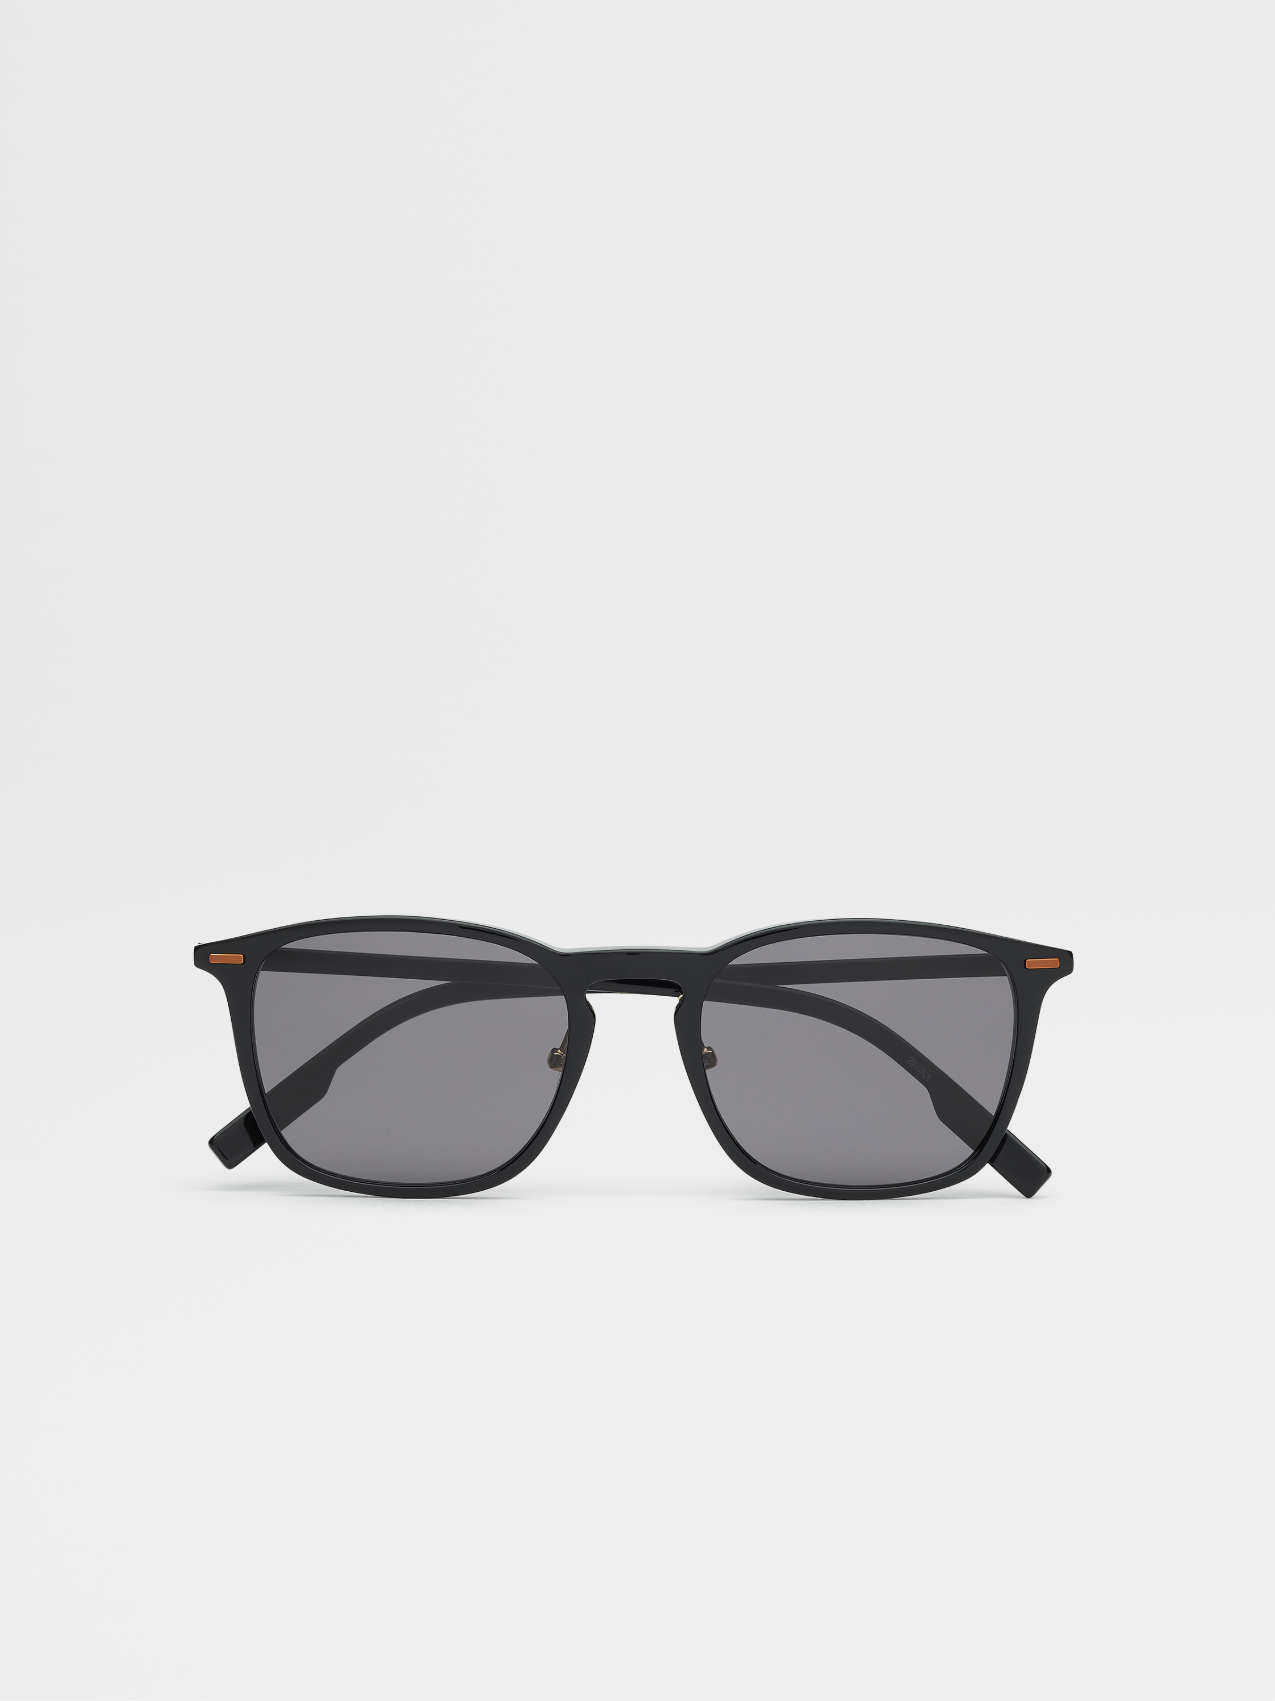 Shiny Black Acetate Leggerissimo Sunglasses